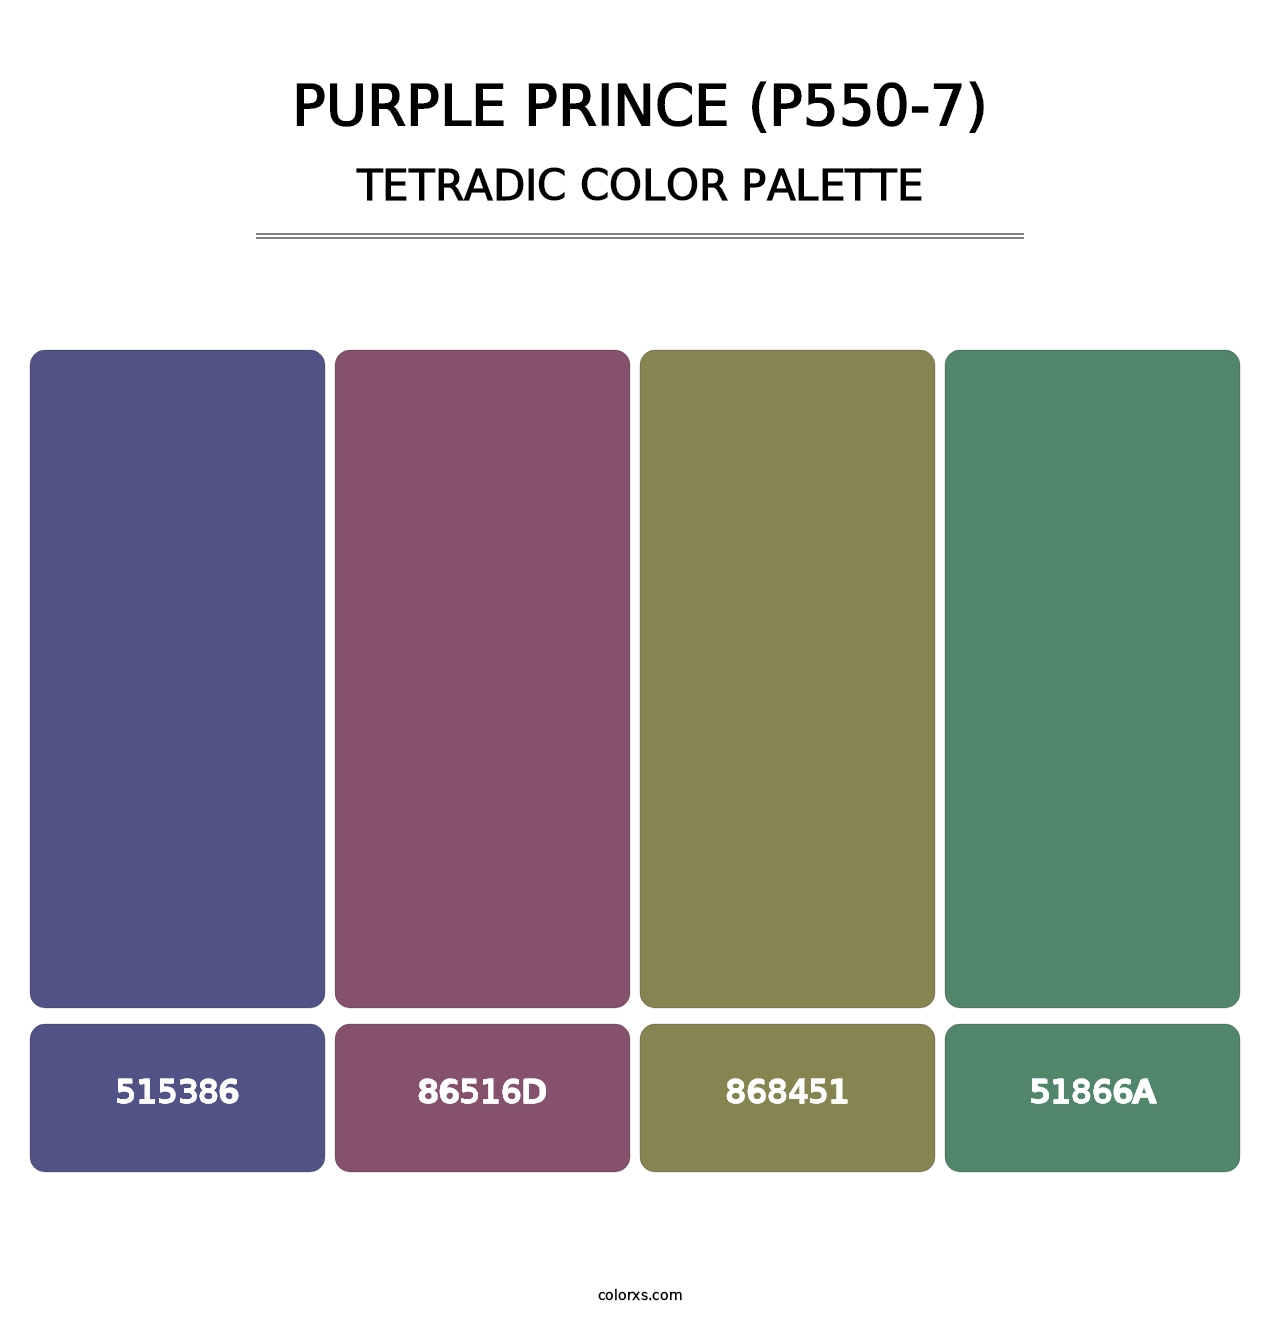 Purple Prince (P550-7) - Tetradic Color Palette